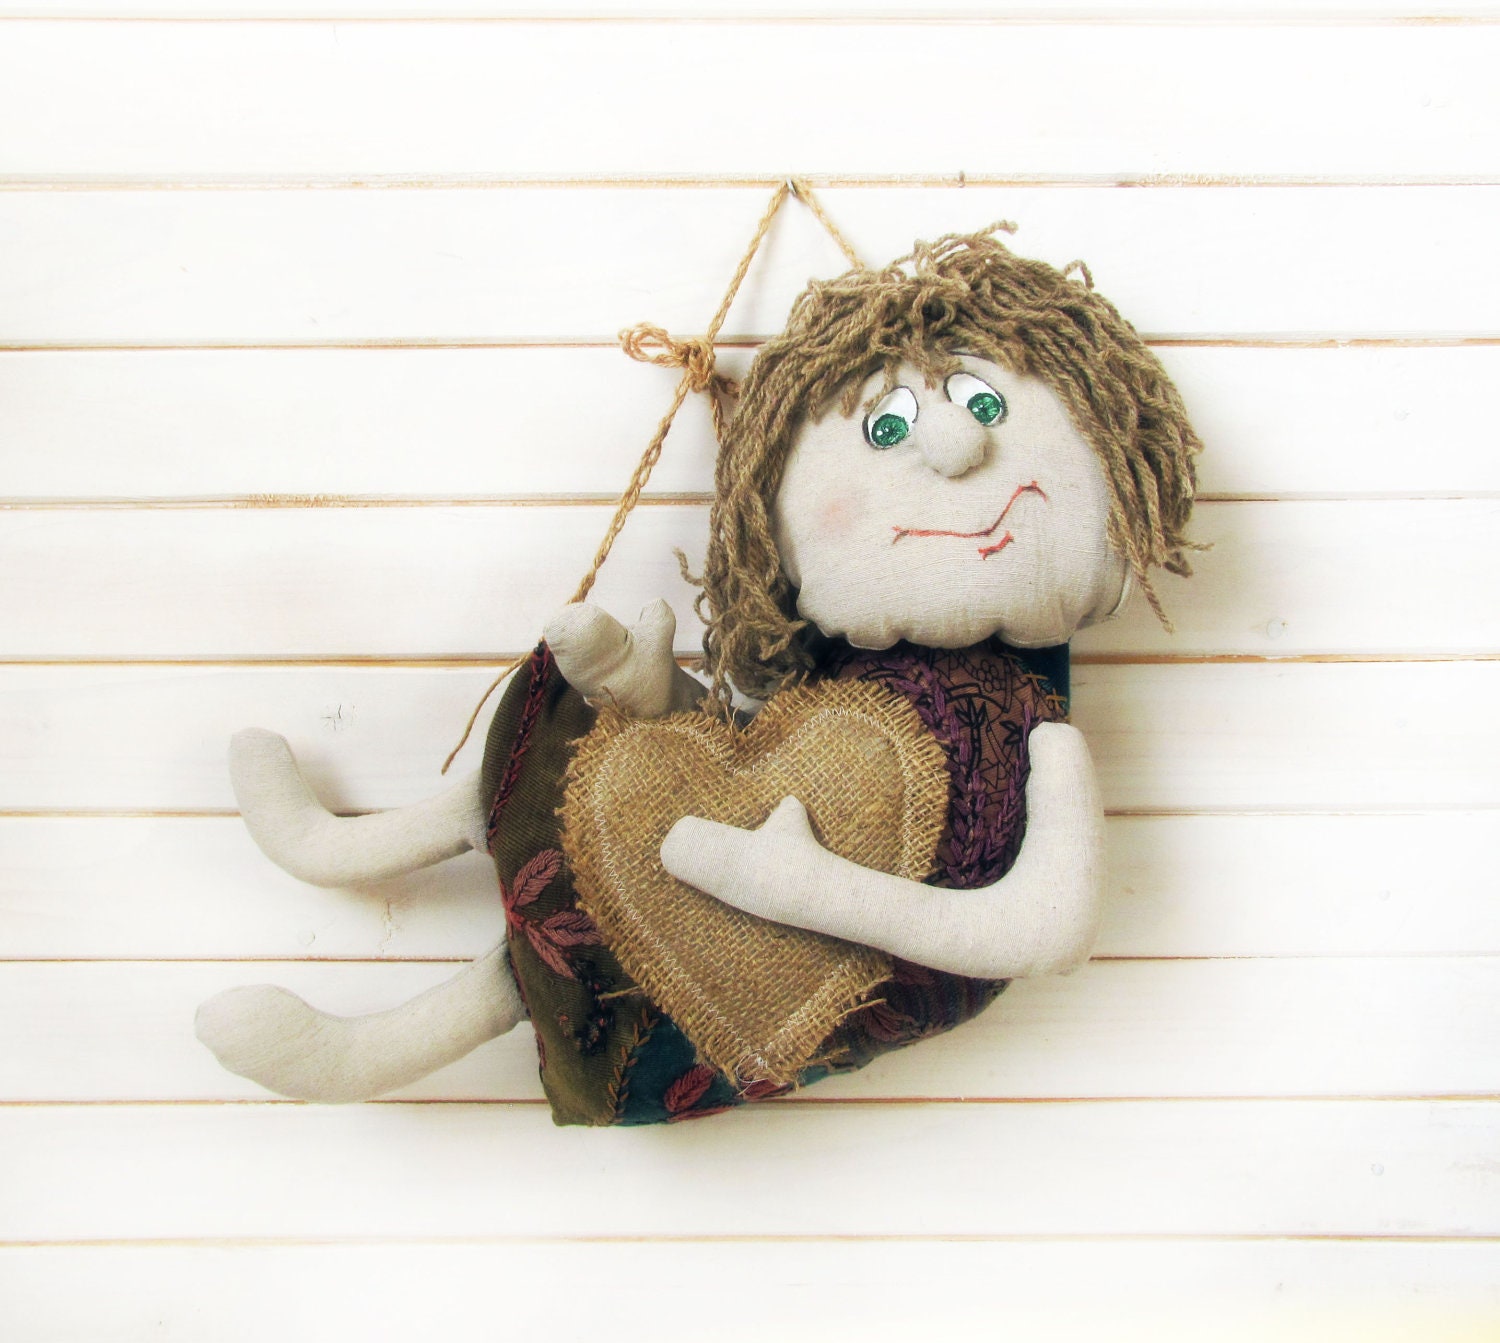 rustic doll,Primitive Doll, hand made doll, Rag Doll, Art Doll, funny doll, Home Decor, Cloth Doll, Child Friendly